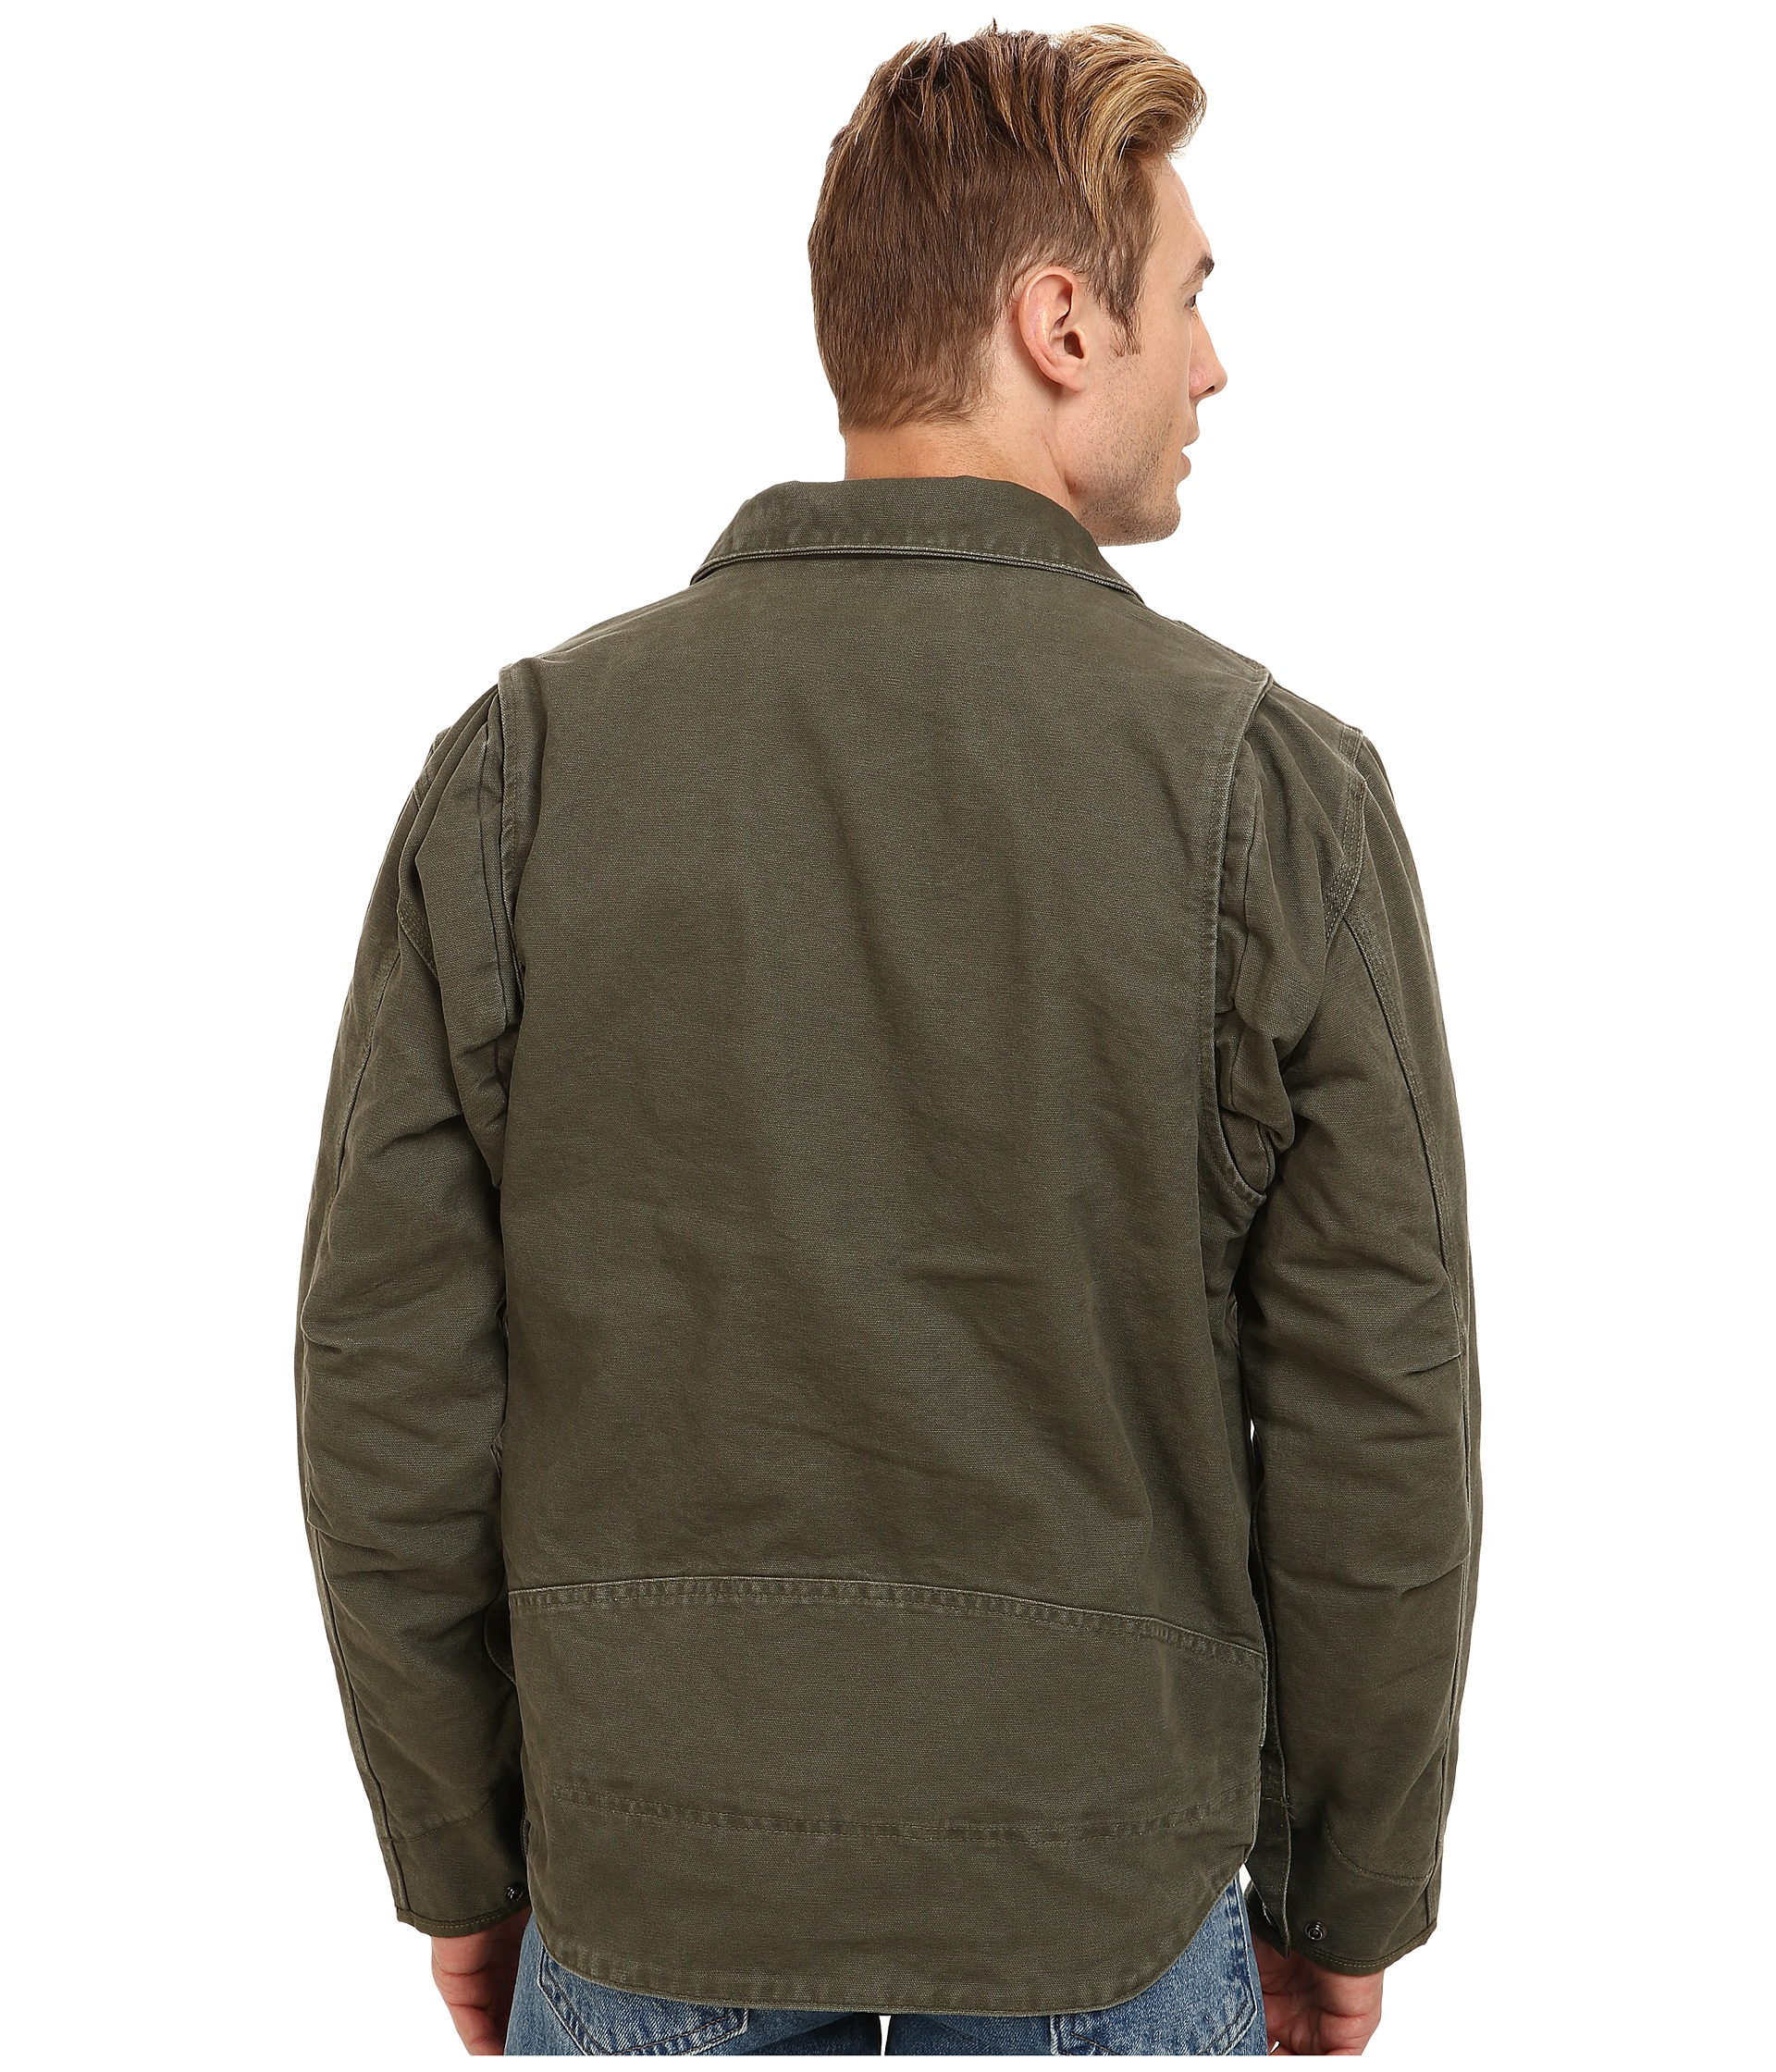 Carhartt Berwick Jacket in Army Green (Green) for Men - Lyst